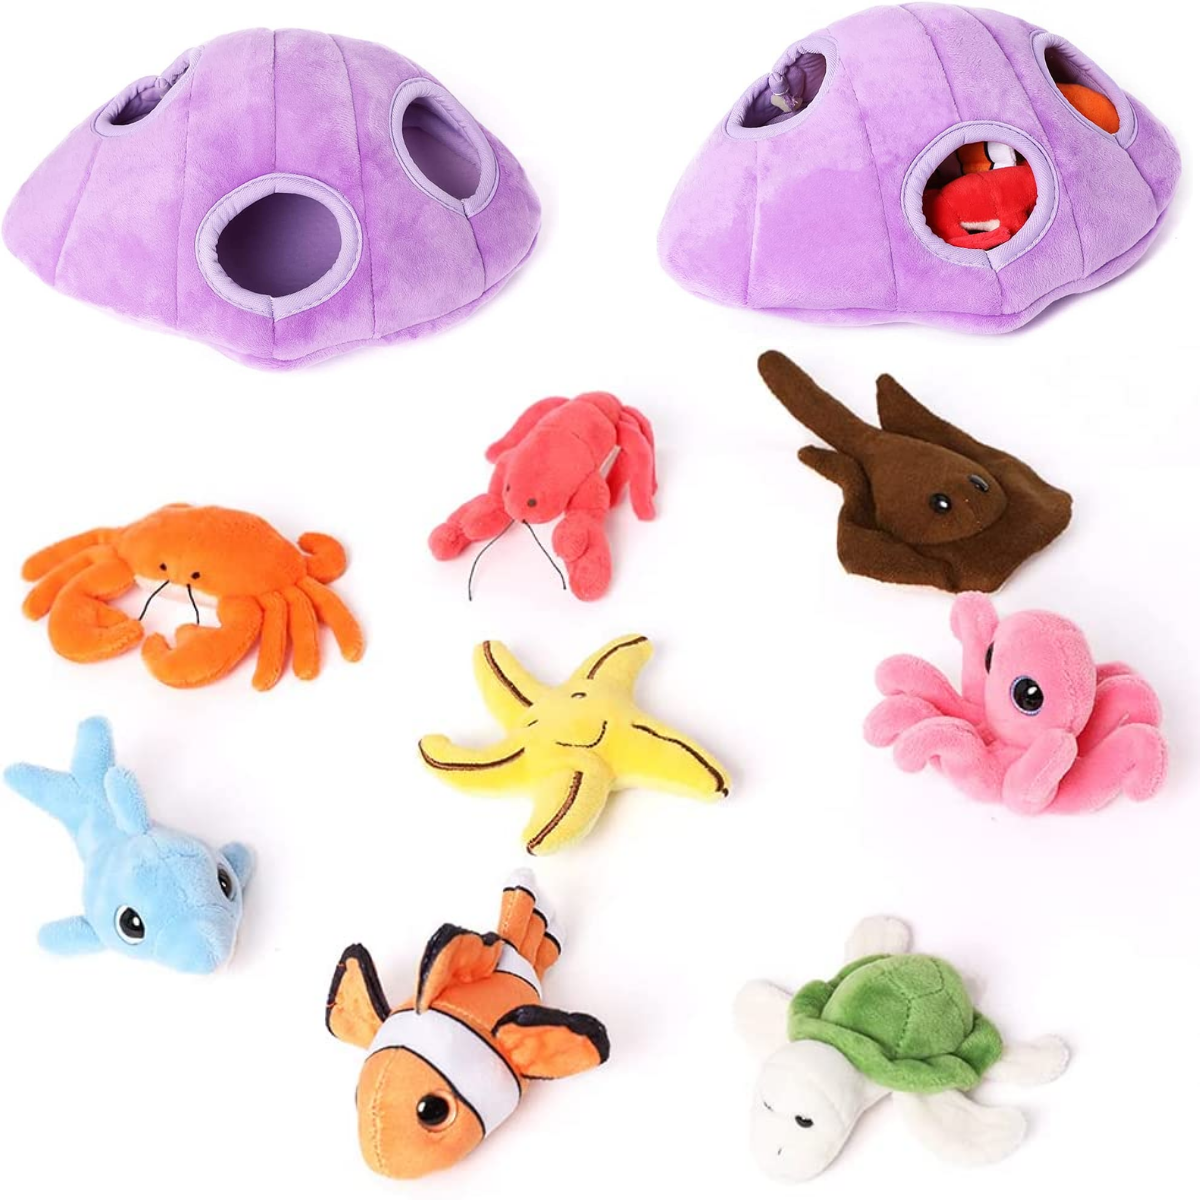 8 Piece Sea Animal Stuffed Toy Set, 10 Inches